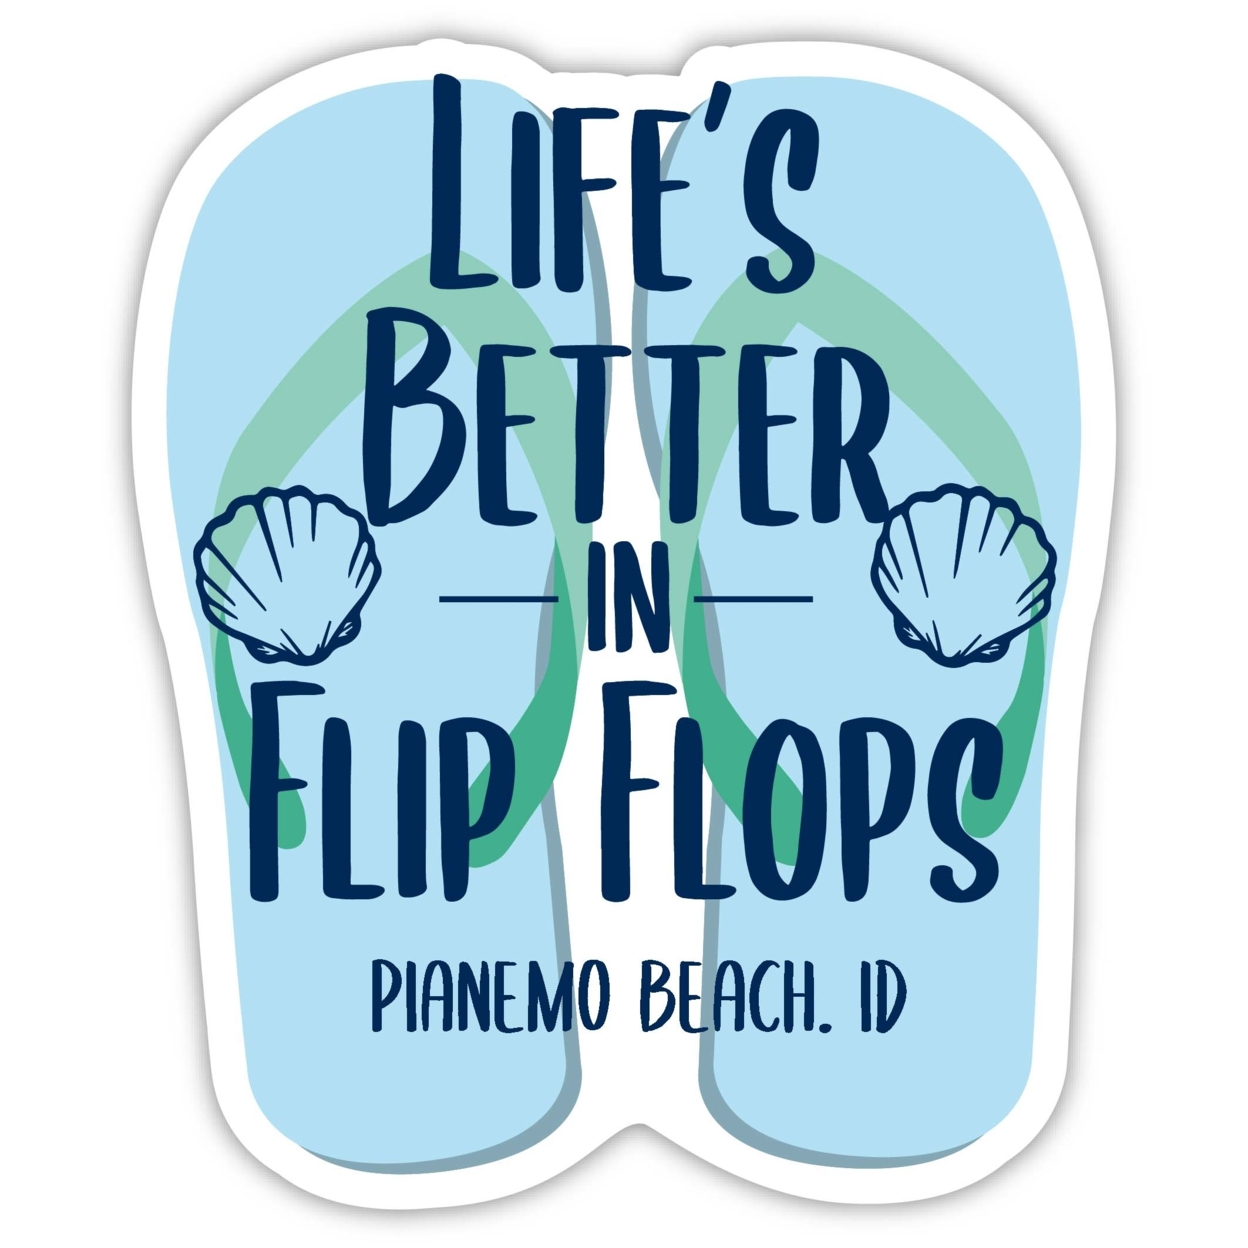 Pianemo Beach Indonesia Souvenir 4 Inch Vinyl Decal Sticker Flip Flop Design